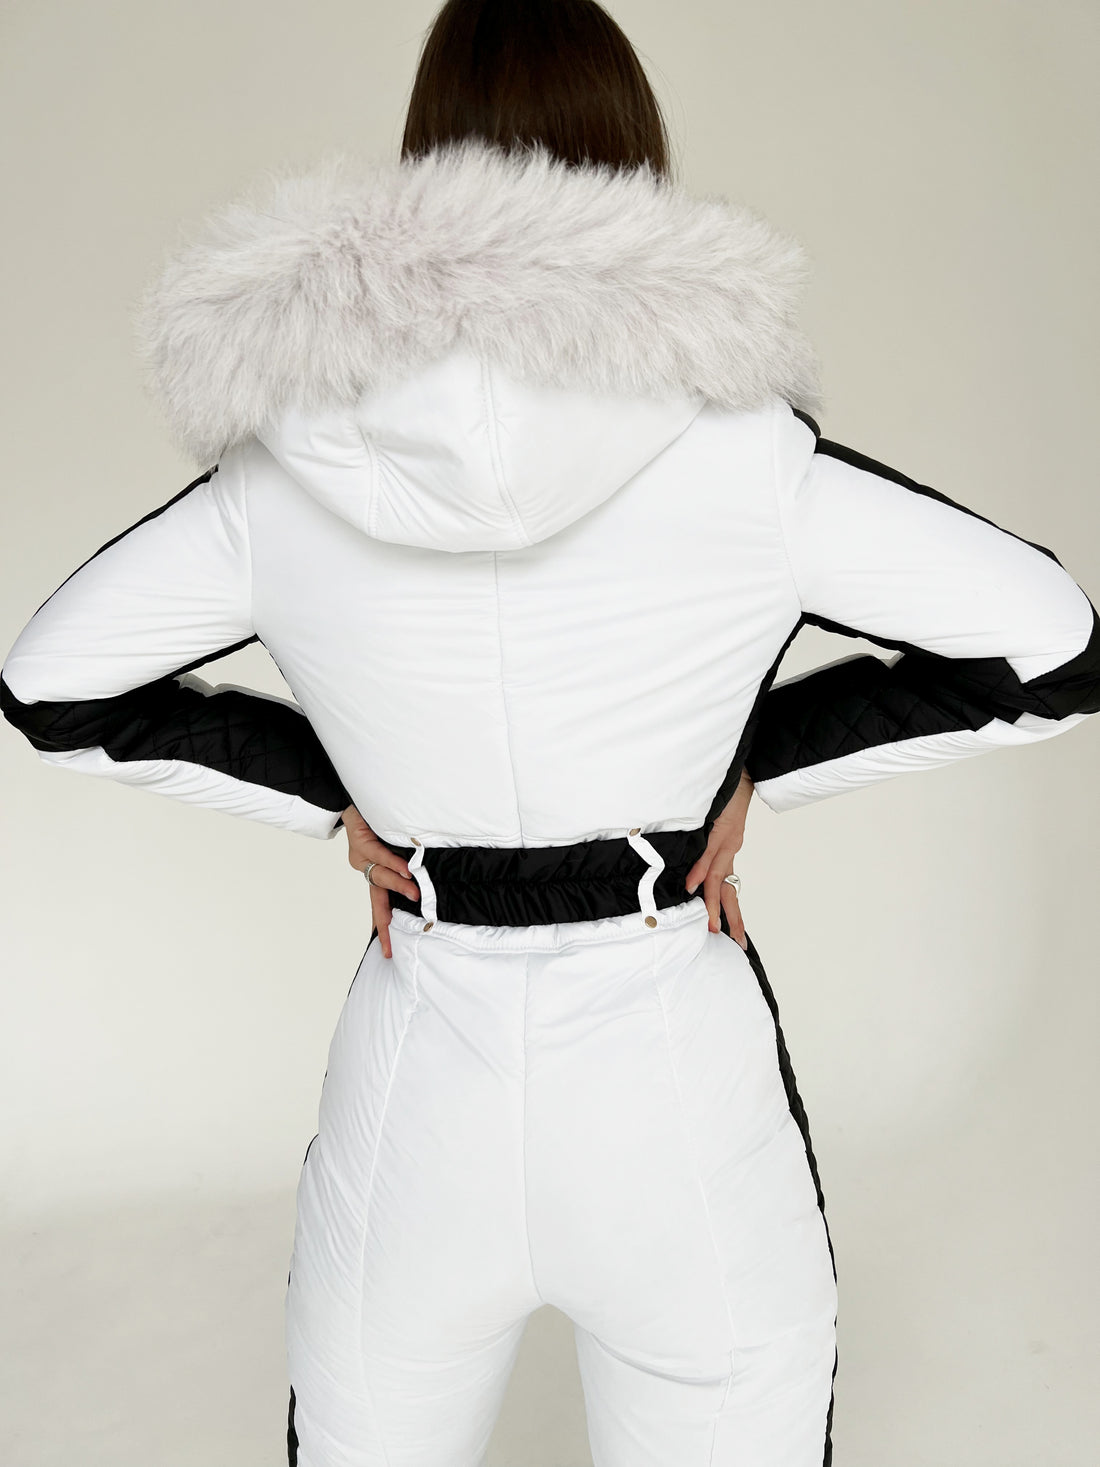 White ski suit DENALI - WHITE- with black side stripes snowsuit sport outfit